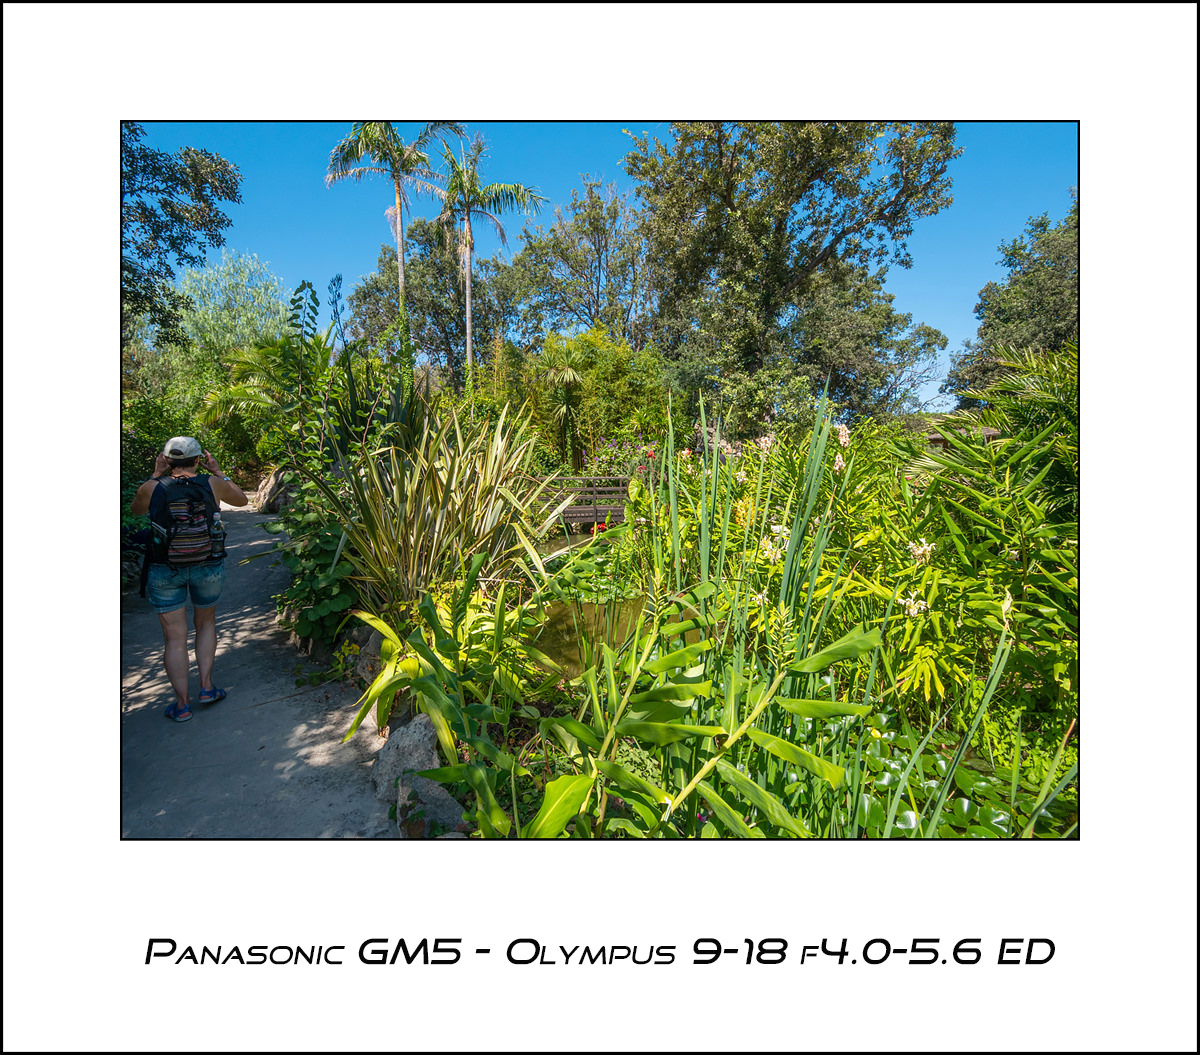 Panasonic GM5 - Olympus 9-18 f4.0-5.6 ED